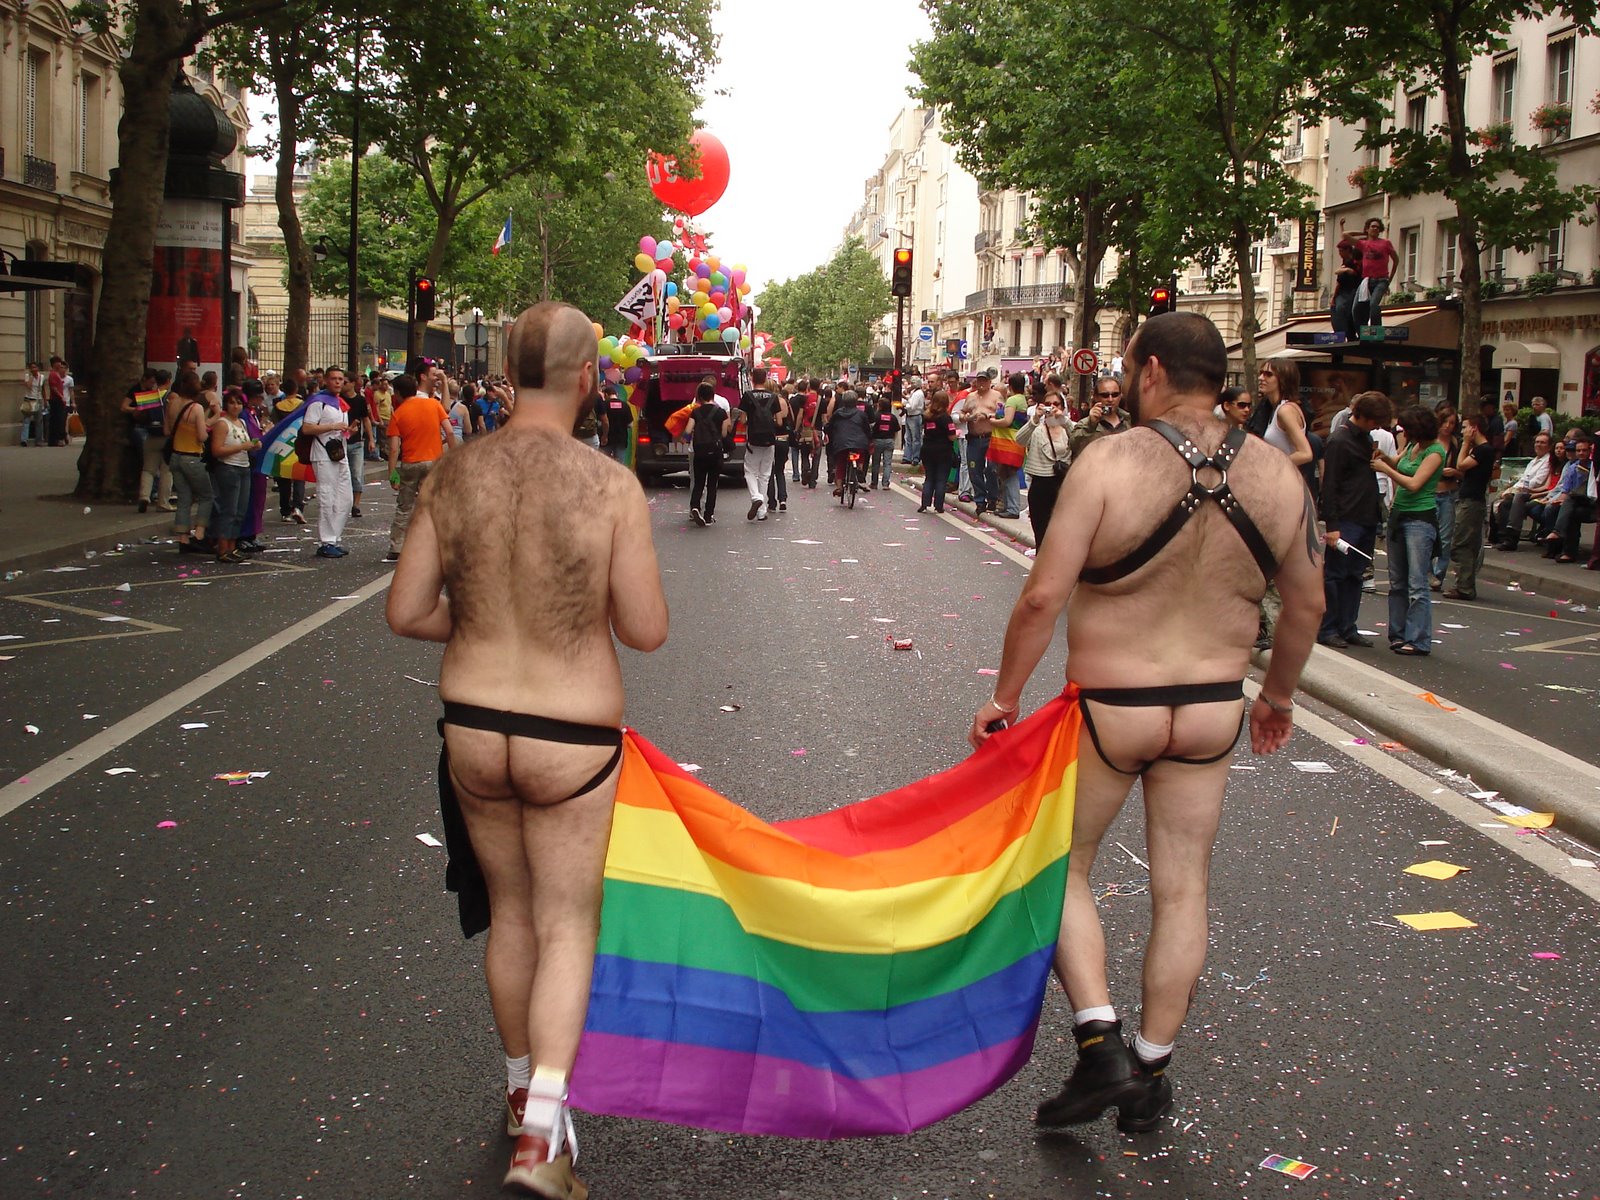 http://olympiada.files.wordpress.com/2014/08/d9905-gay-pride-2011-paris.jpg